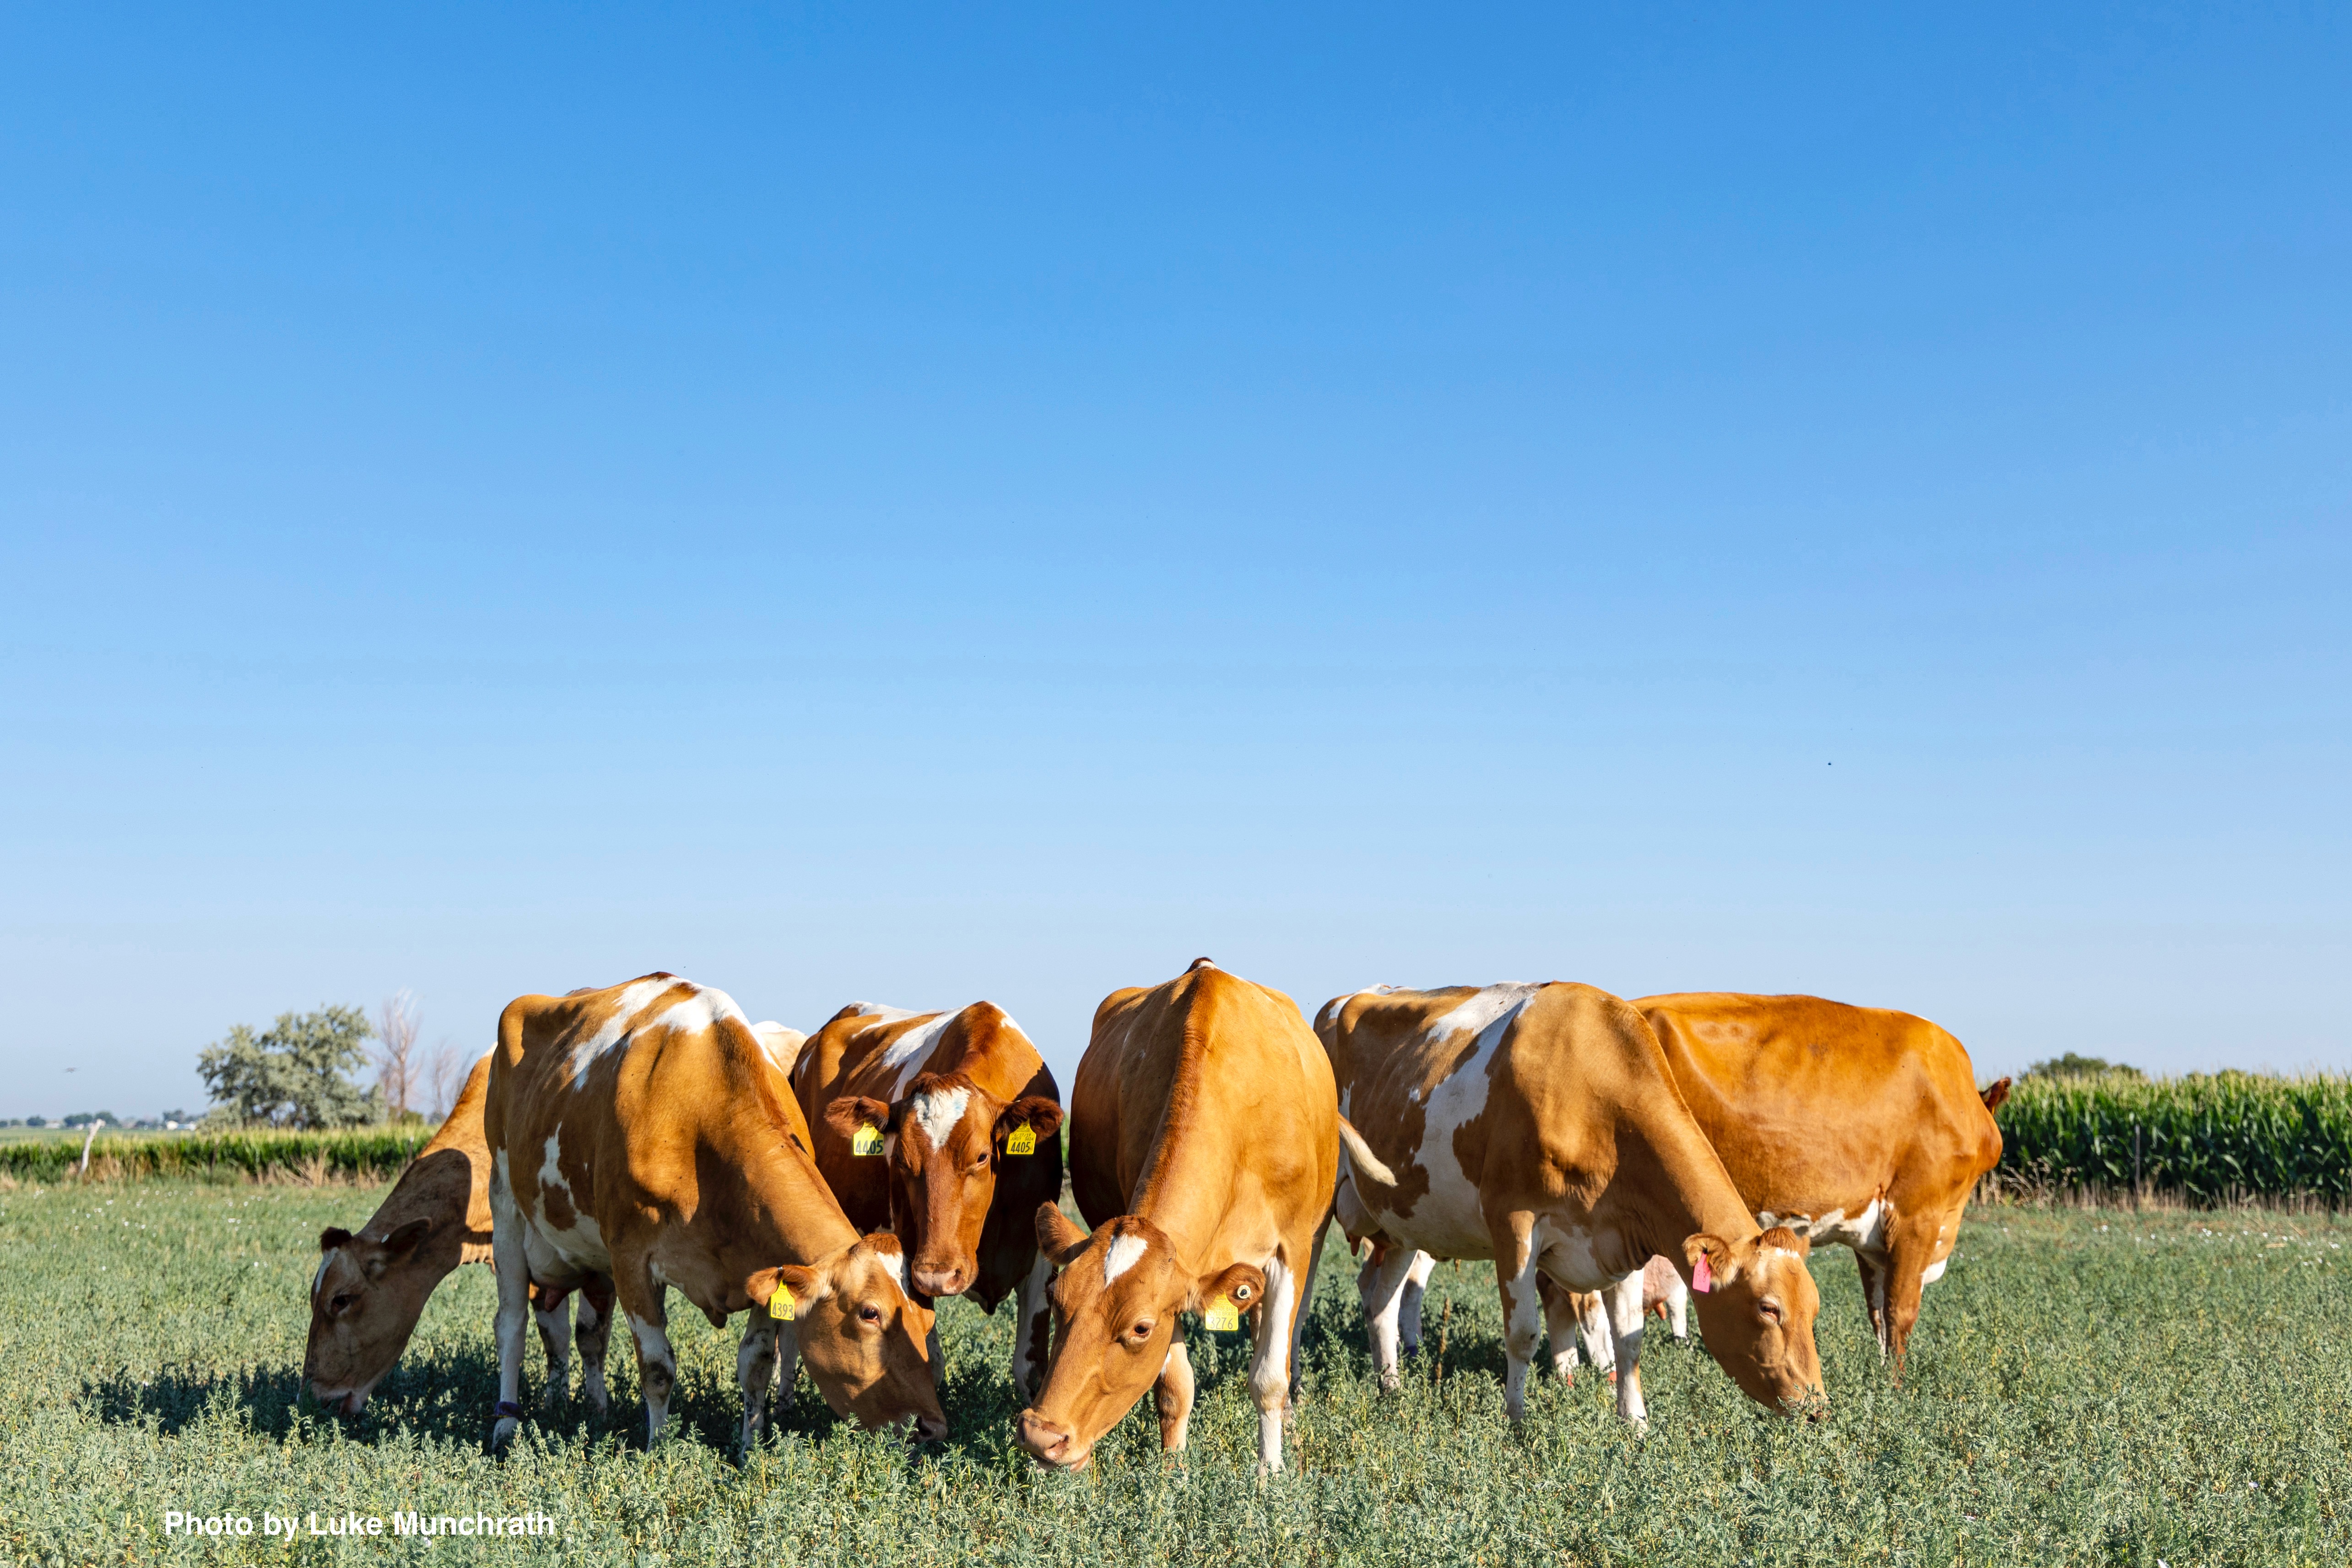 Dairy cows feed in an open field